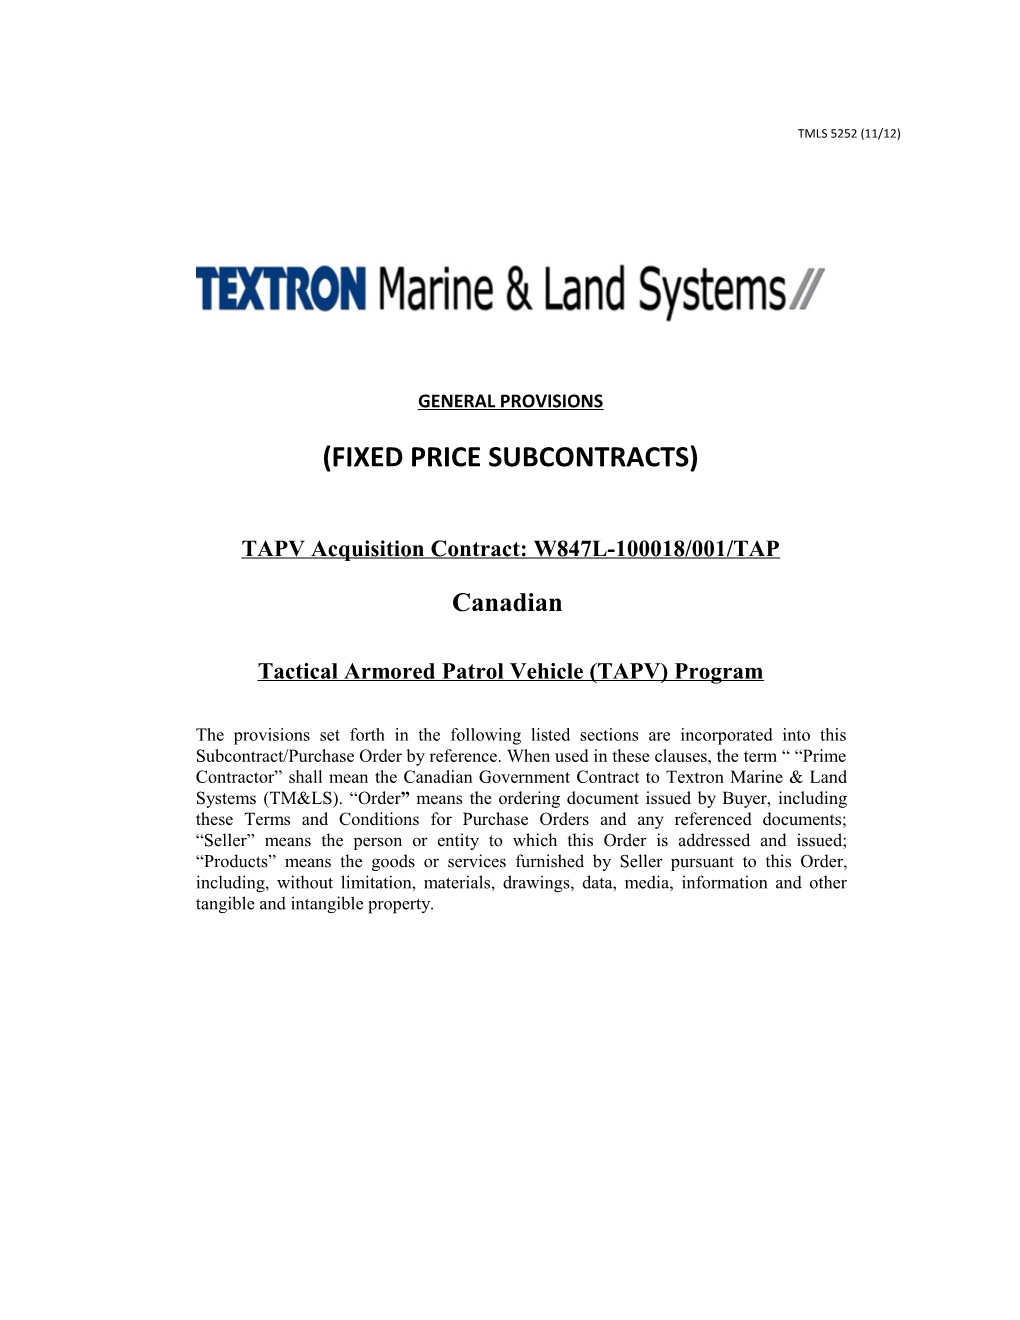 TAPV Acquisition Contract: W847L-100018/001/TAP